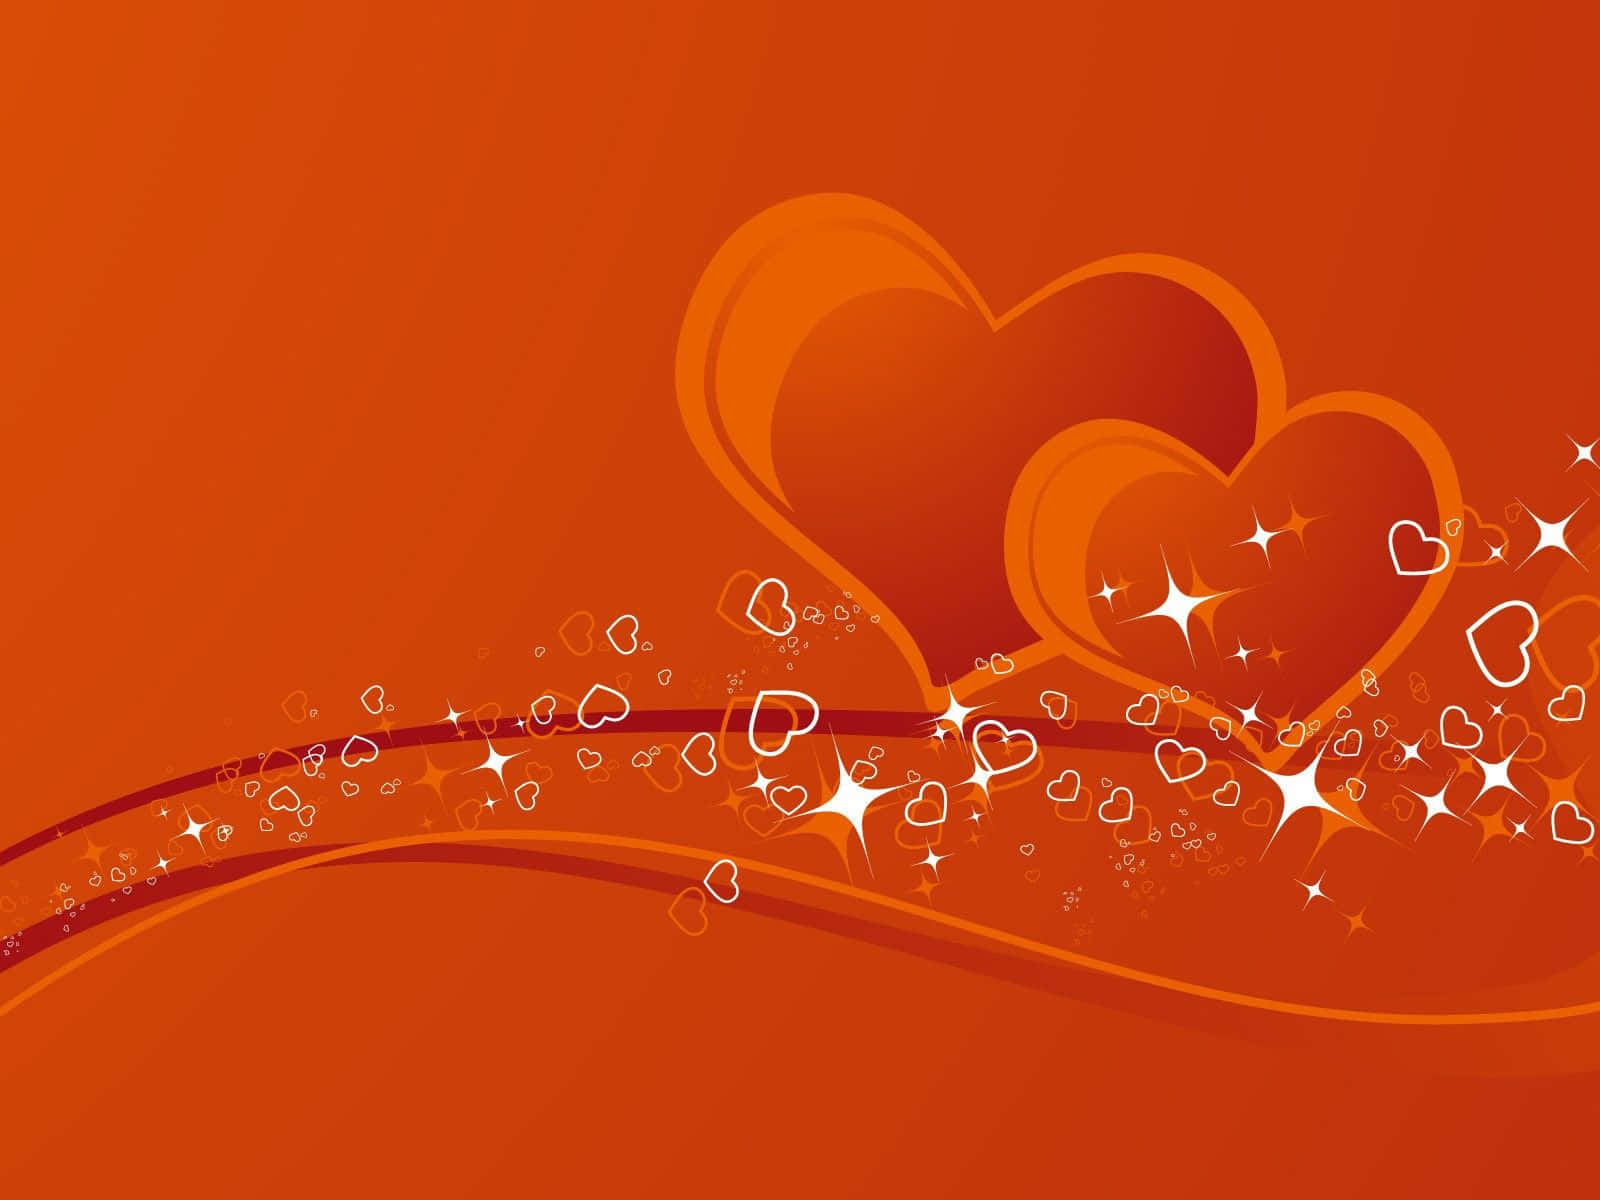 A Vibrant Orange Heart - The Symbol of Love and Passion Wallpaper